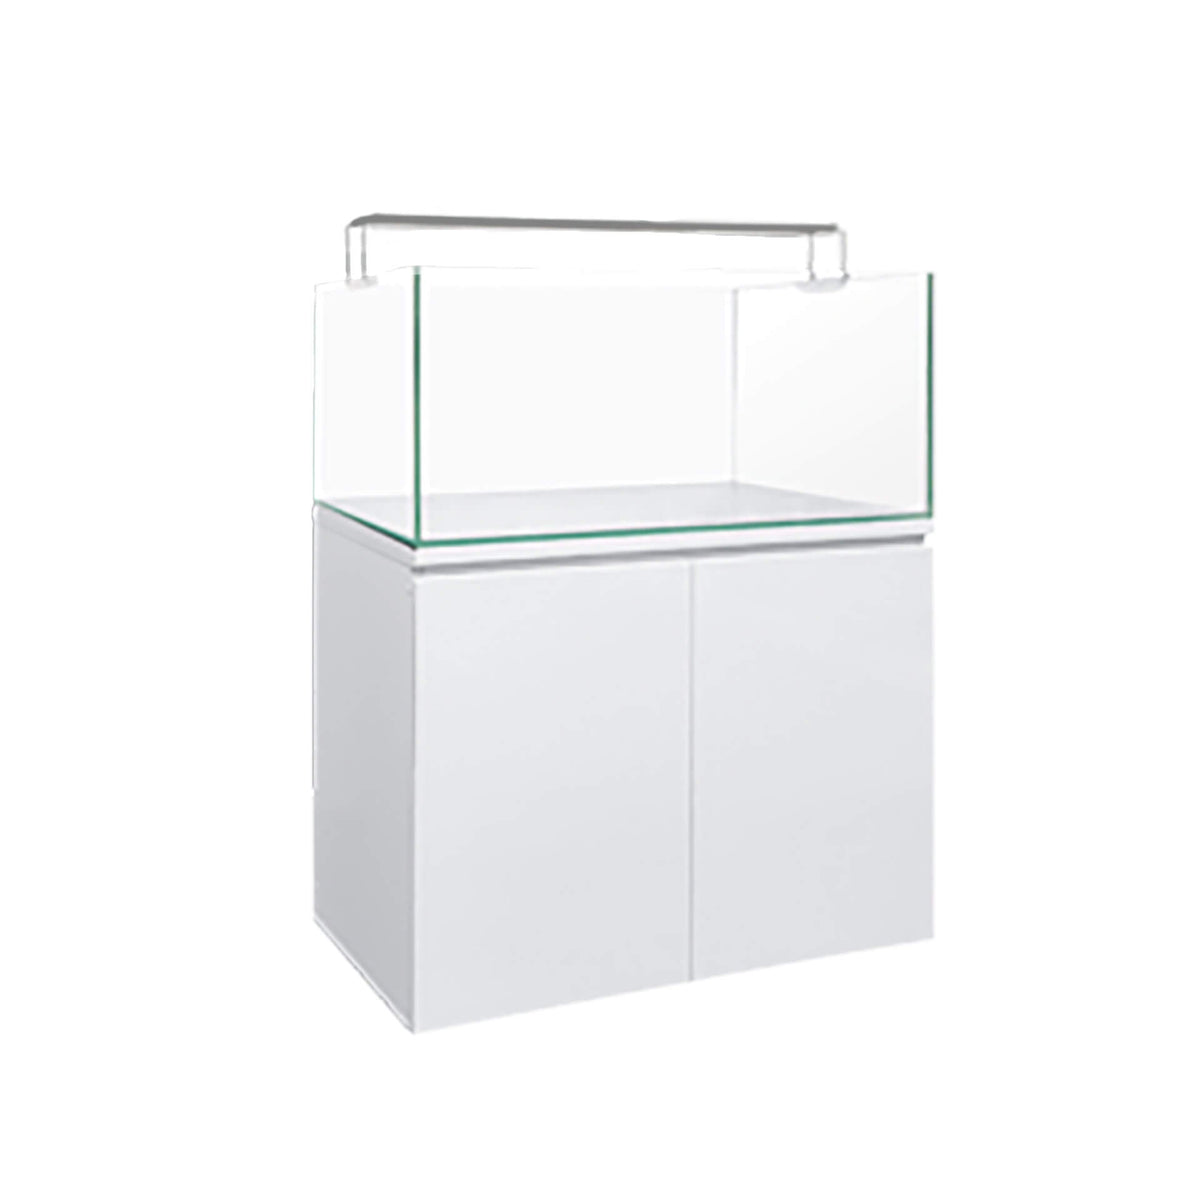 Dymax GS Aquarium Kit 60cm - Tank, Cabinet and Light (WHITE)**